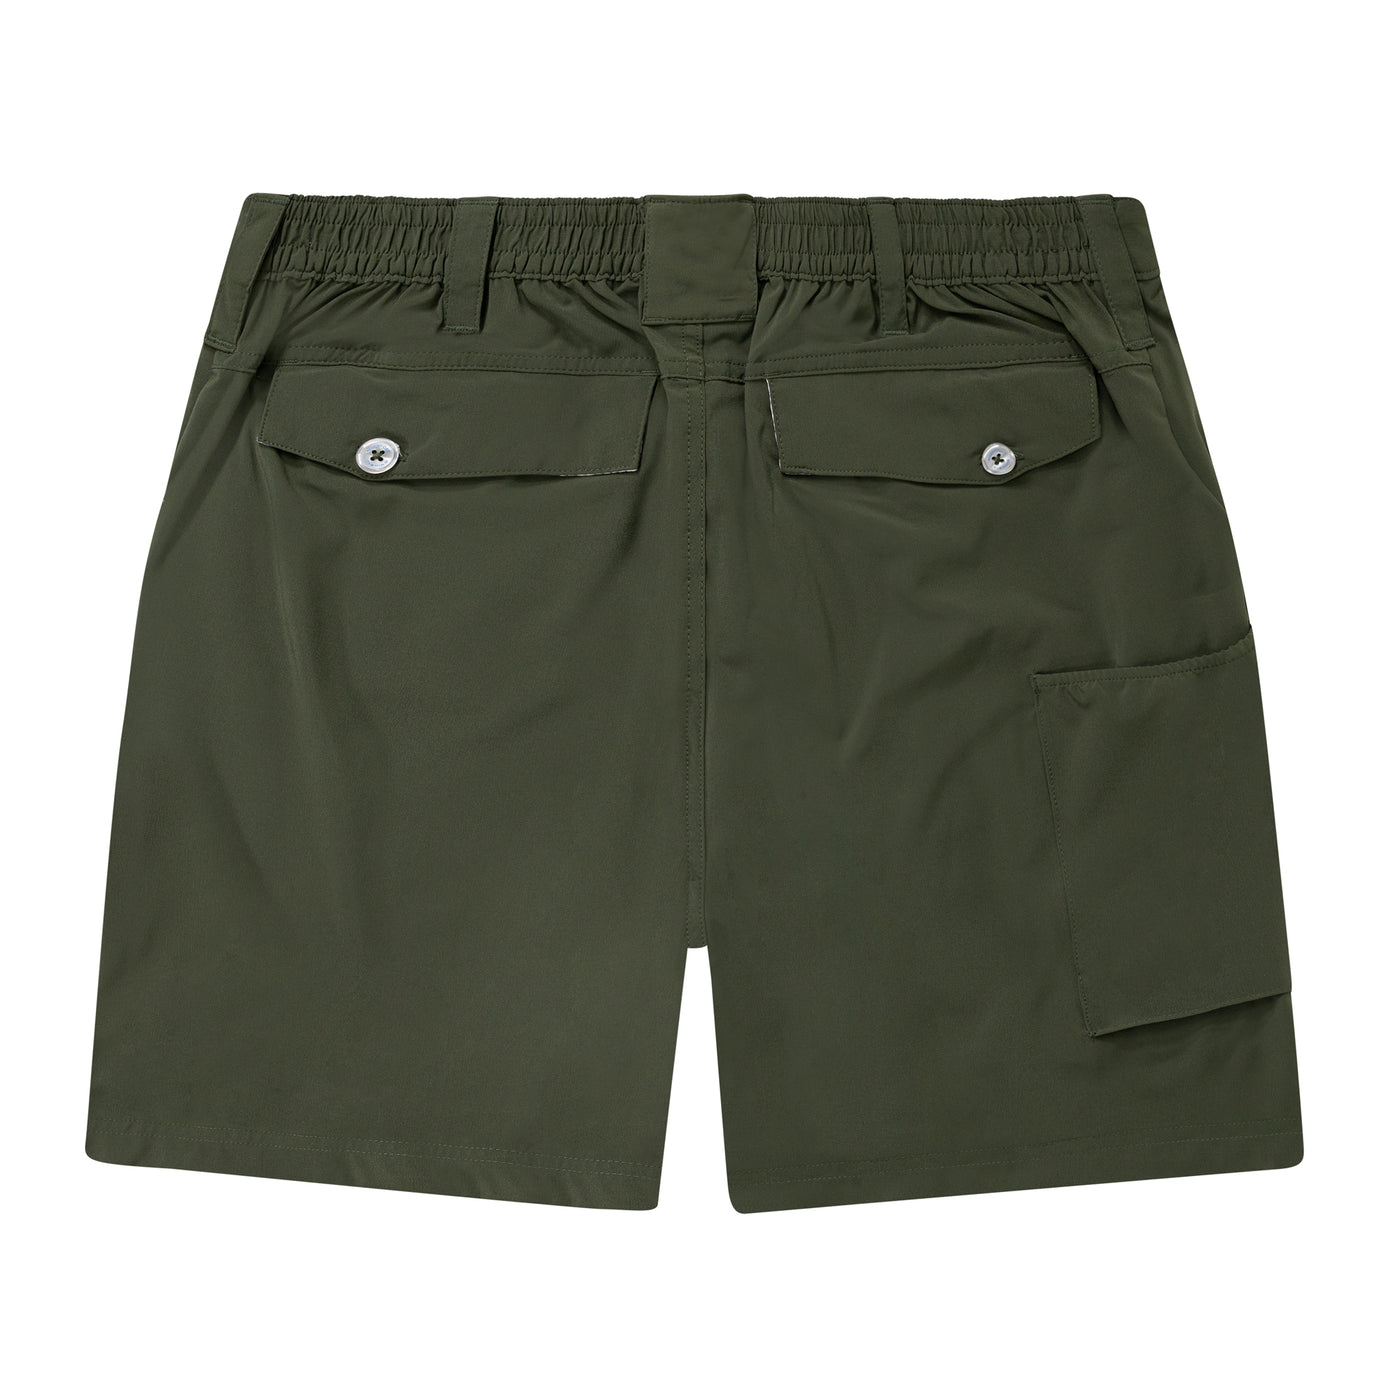 Mossy Oak Men's Flex Fishing Shorts - L / Olivine